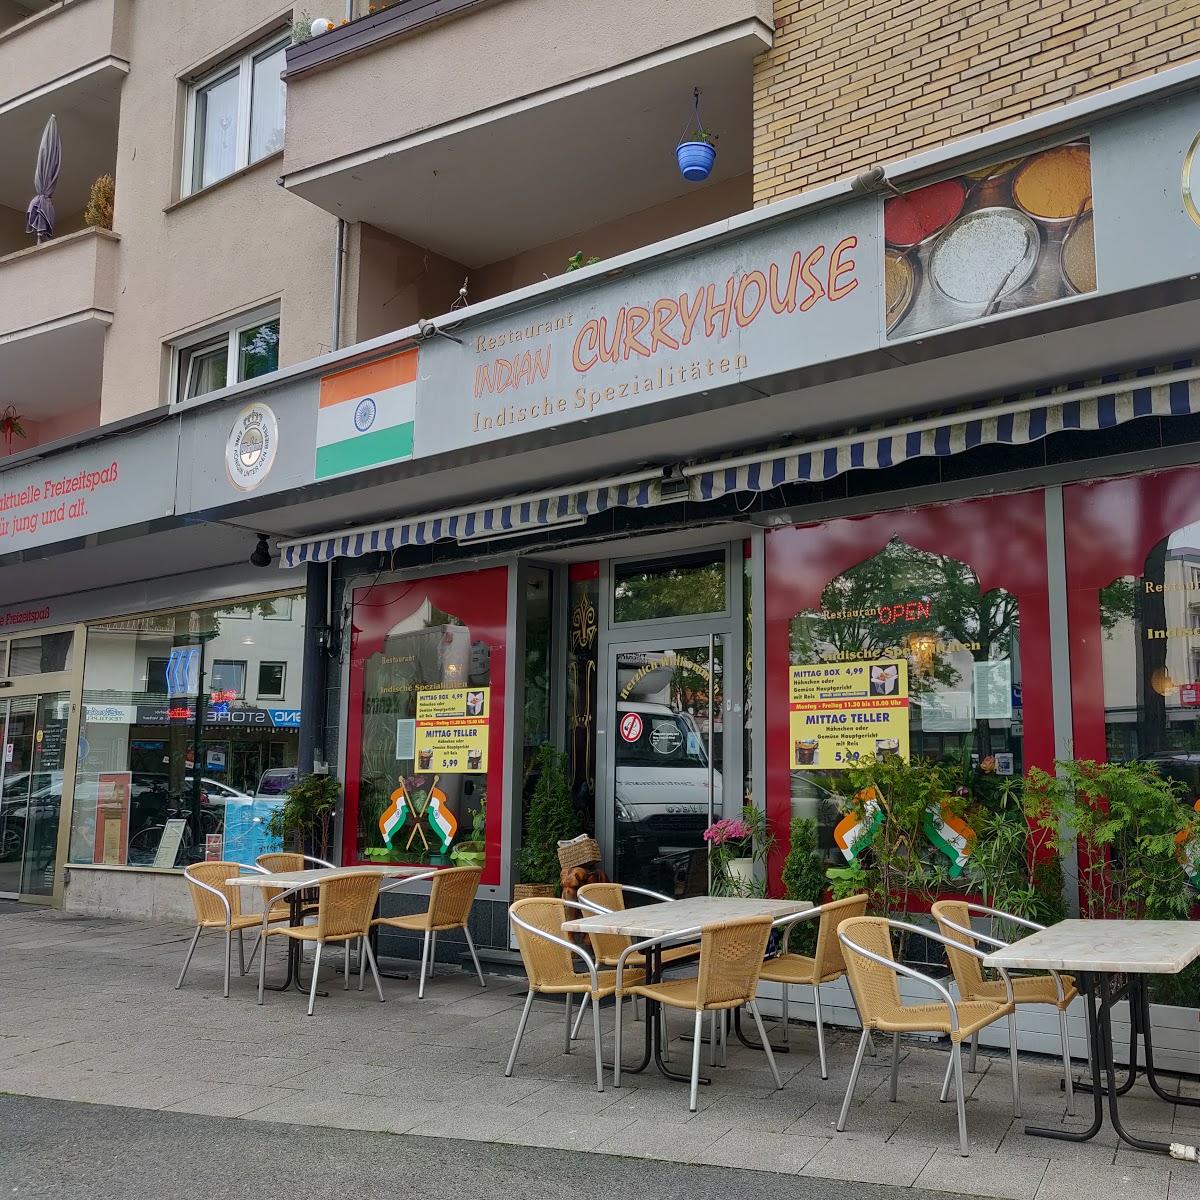 Restaurant "Restaurant Indian Curryhouse" in Paderborn